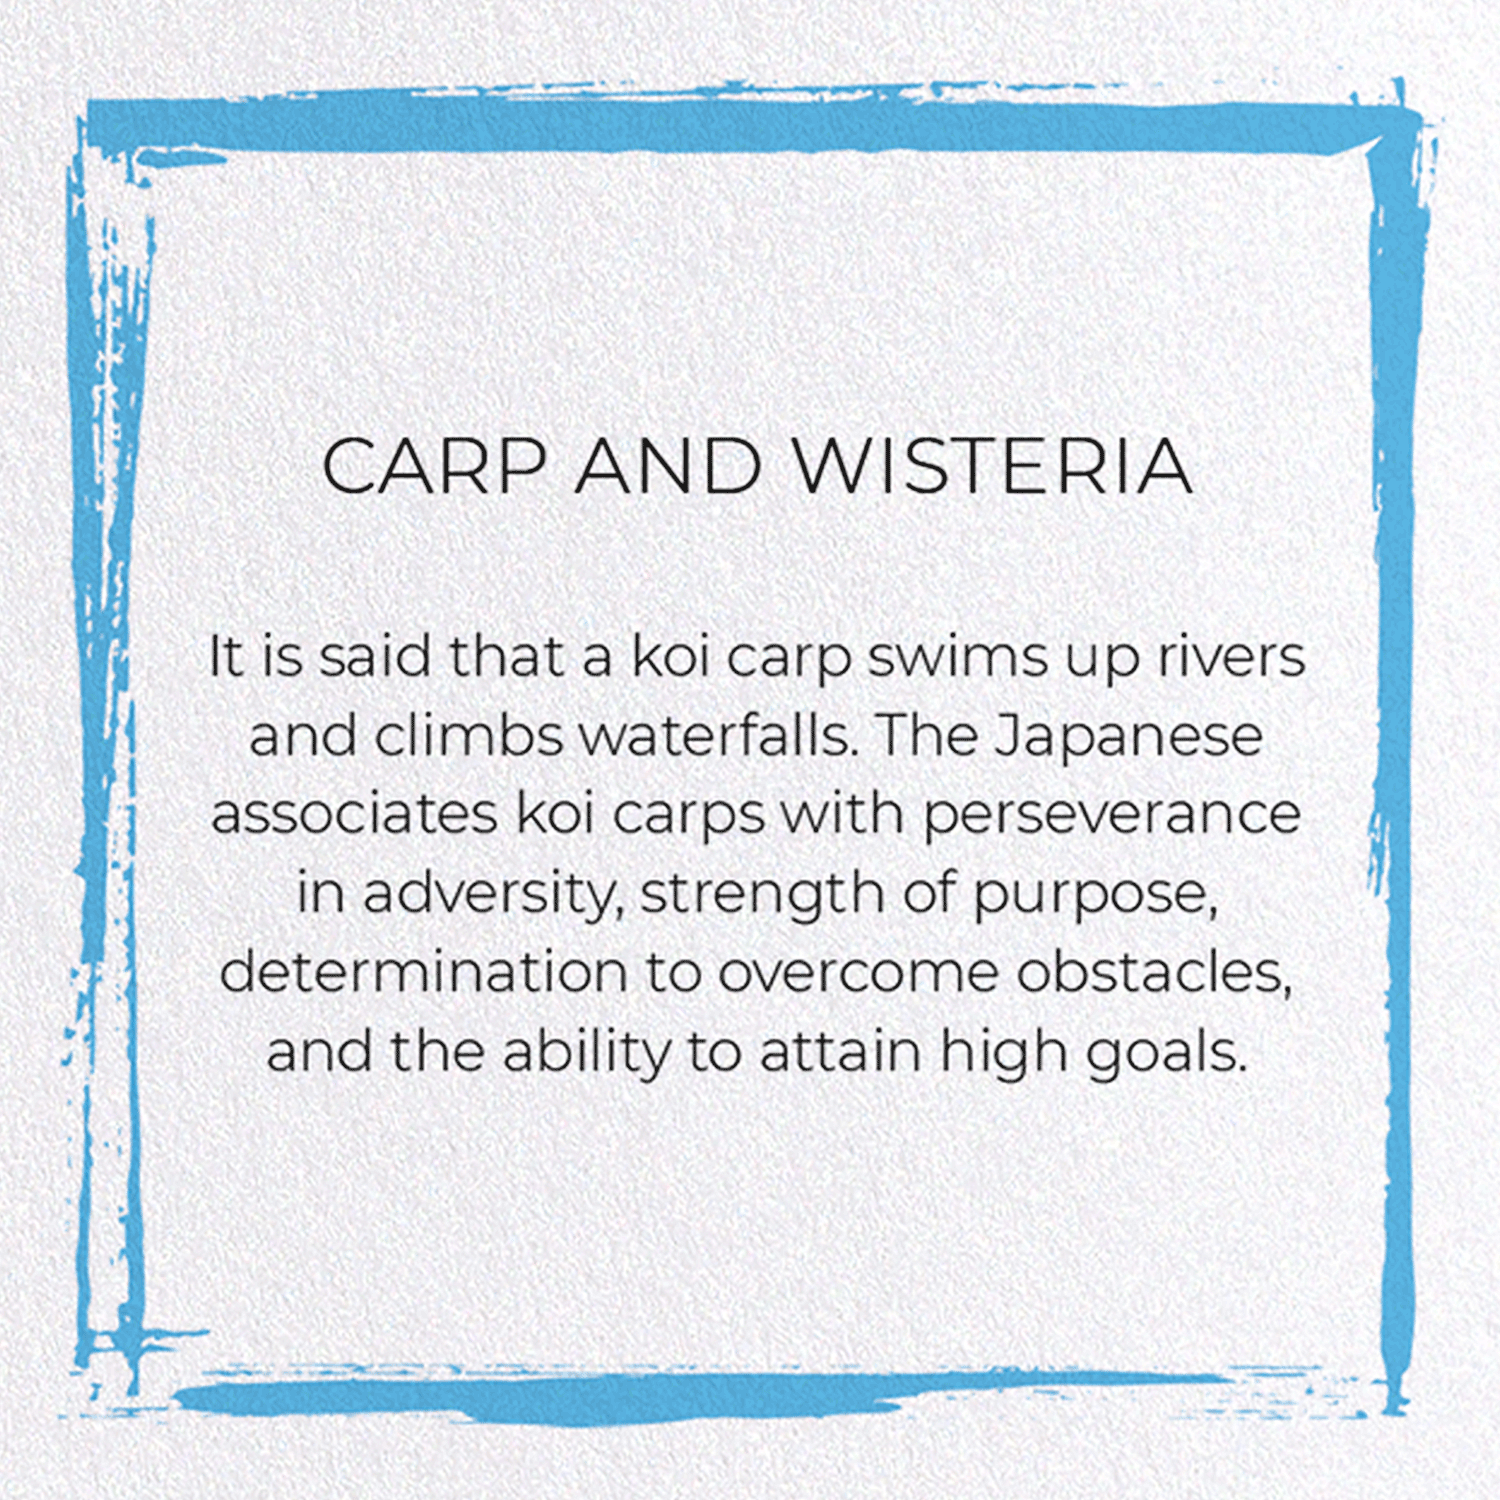 CARP AND WISTERIA